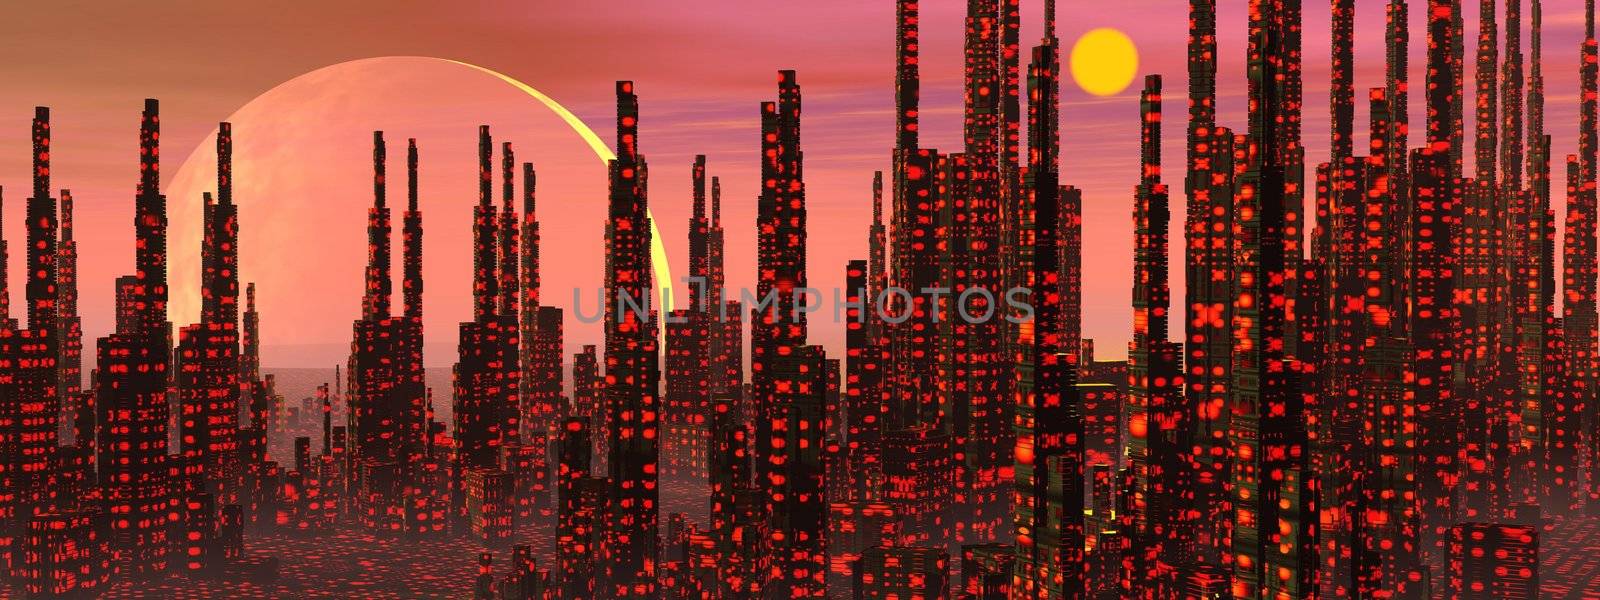 Futuristic buildings in a fantasy city and strange planets